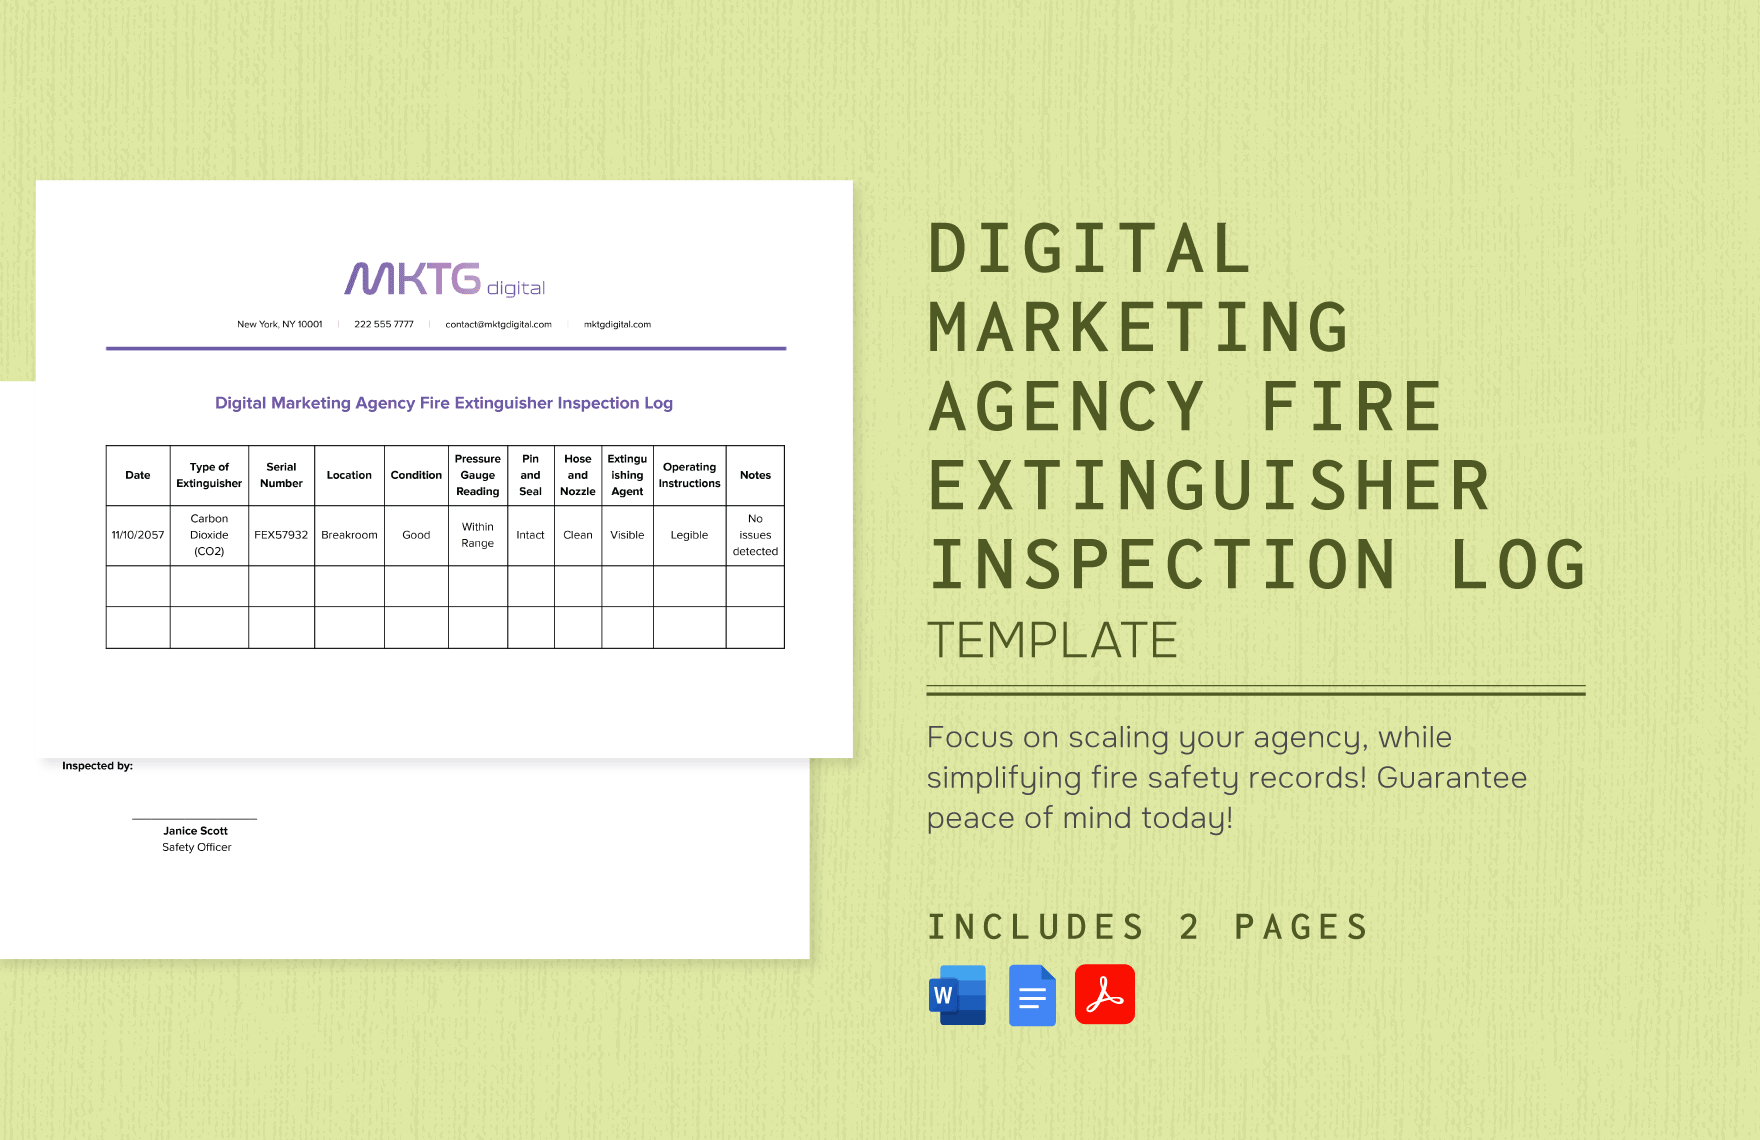 Digital Marketing Agency Fire Extinguisher Inspection Log Template